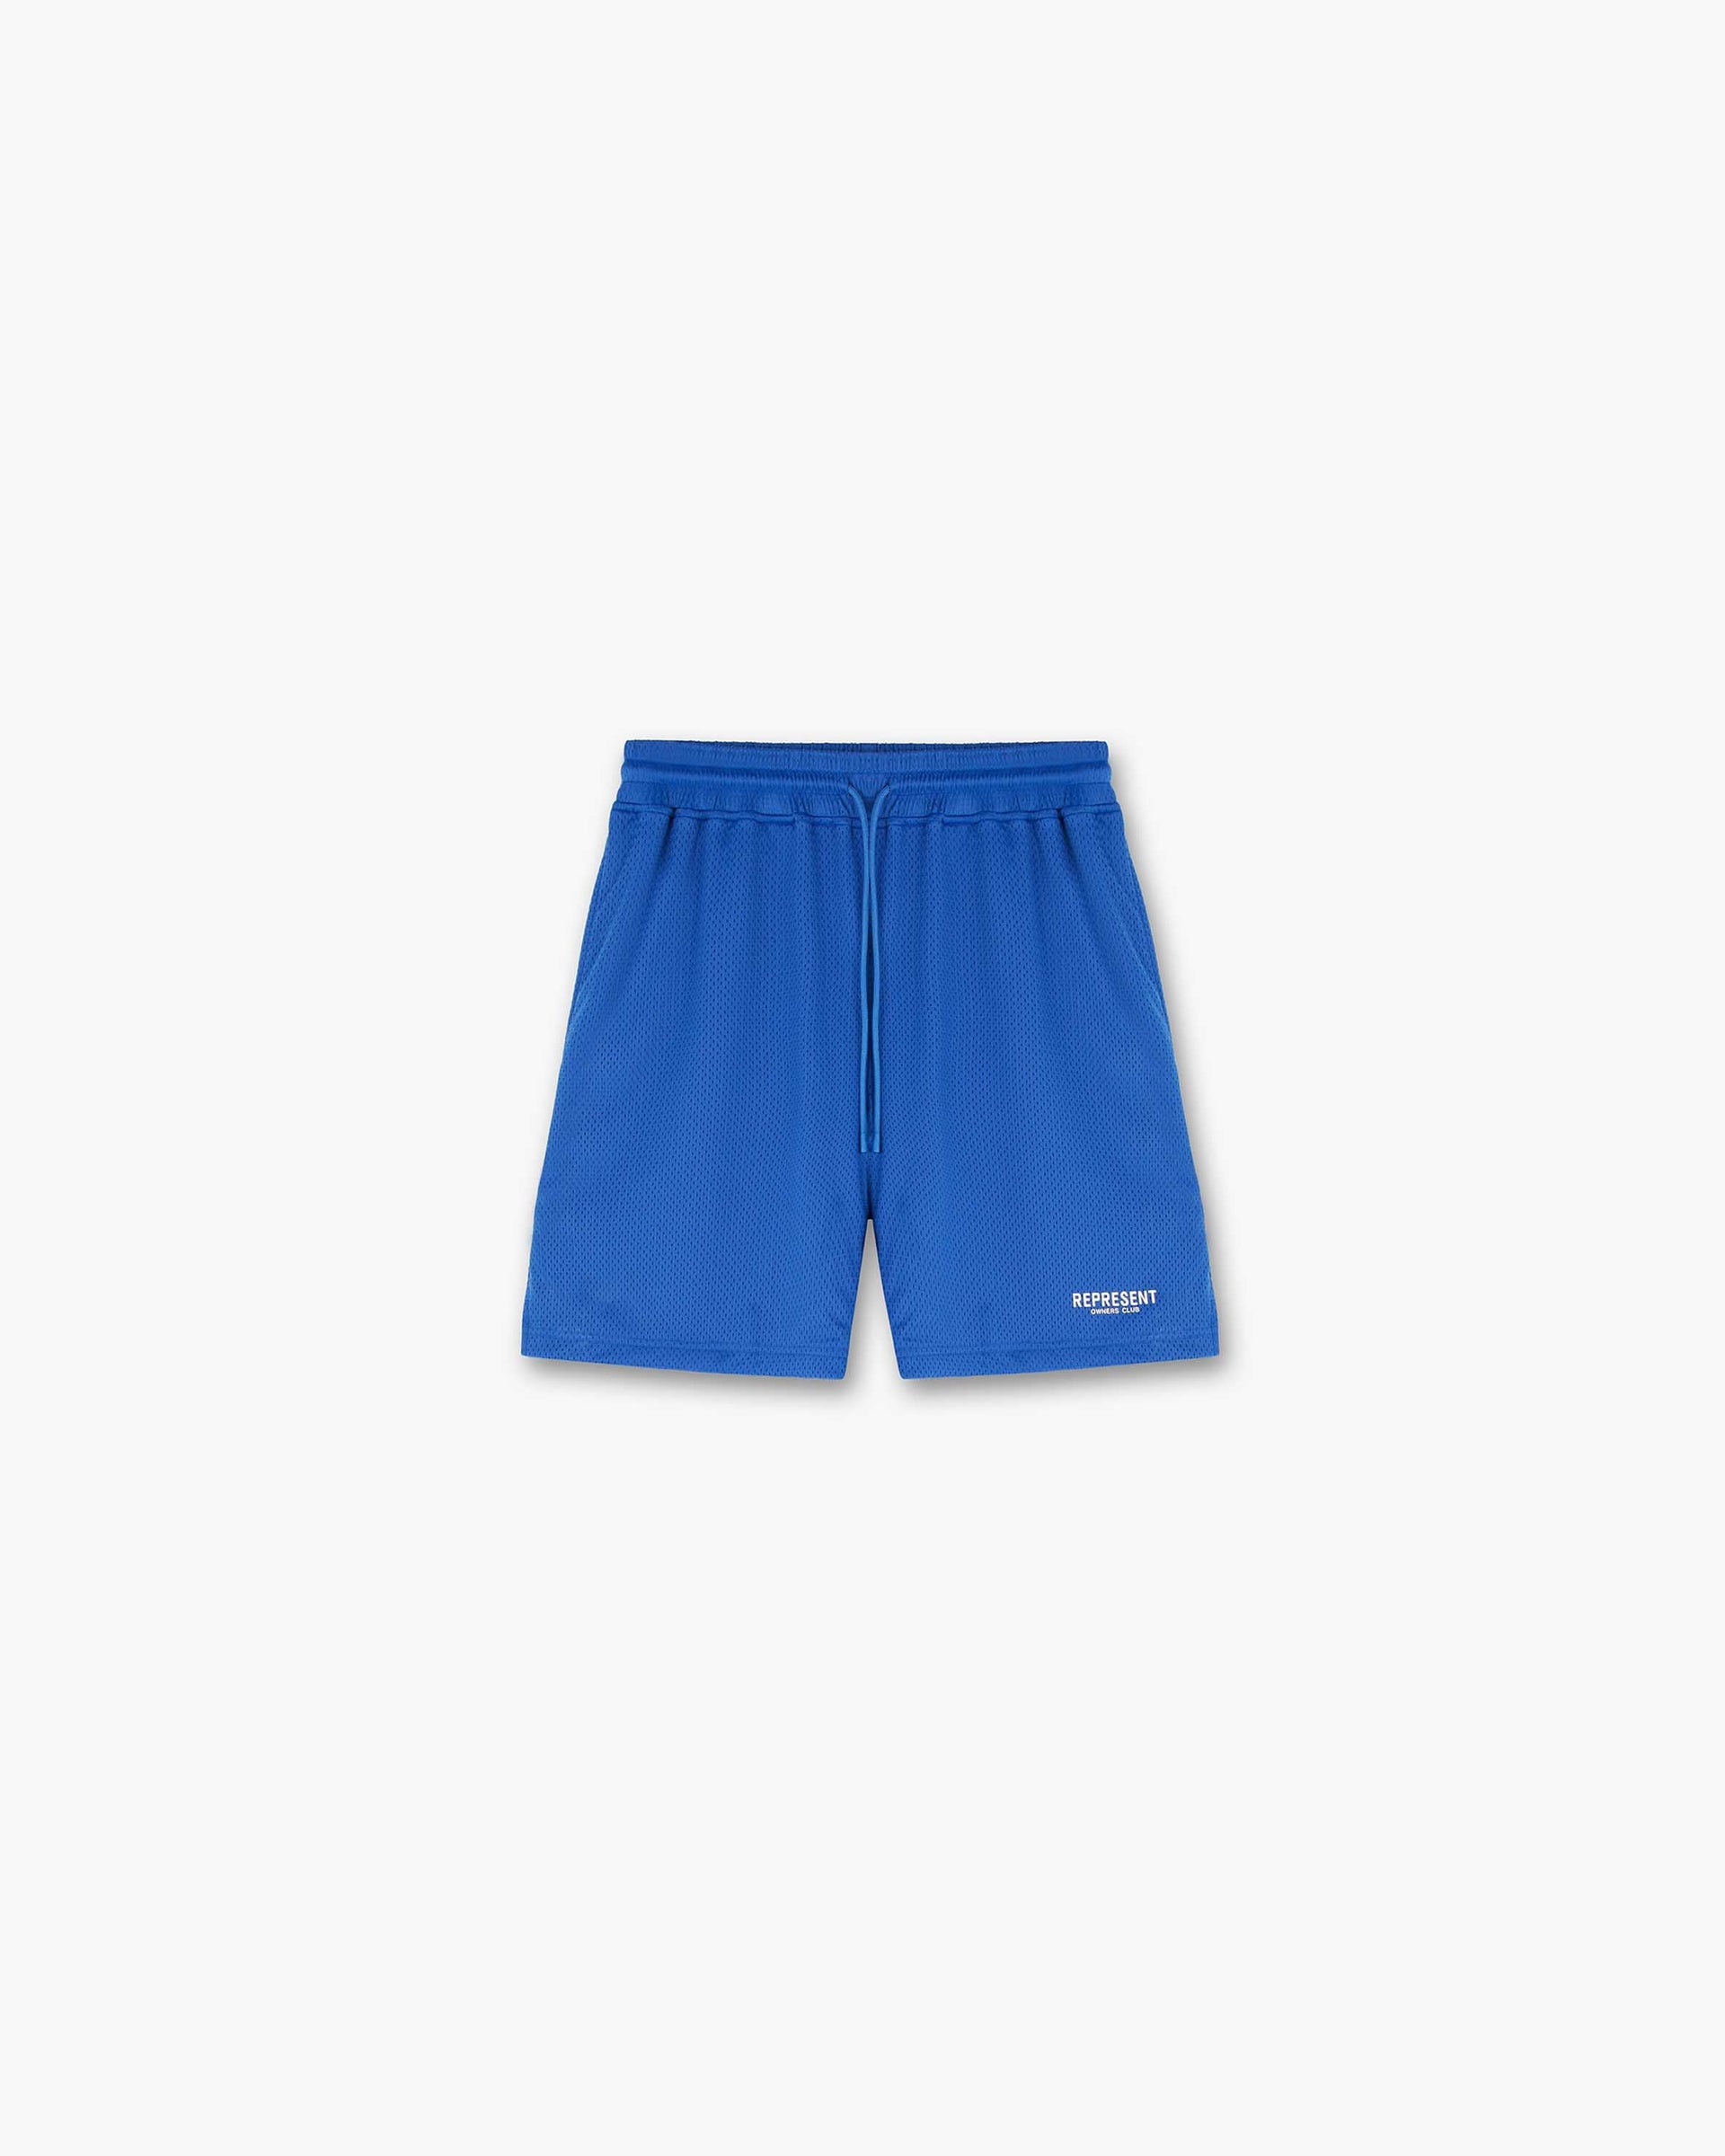 Represent Owners Club Mesh Shorts | Cobalt Shorts Owners Club | Represent Clo